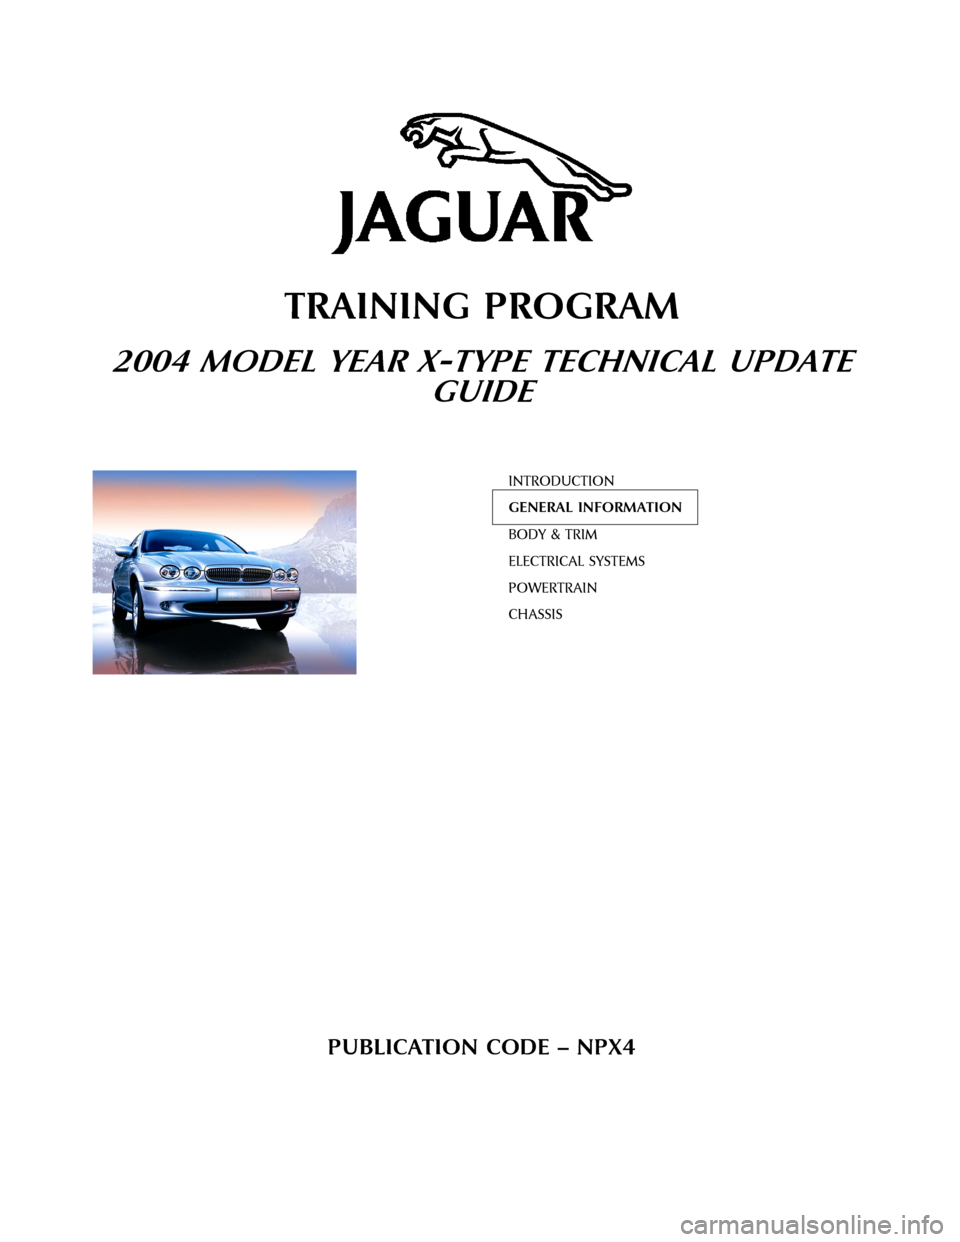 JAGUAR X TYPE 2004 1.G Technical Guide Update  	
  	
 
	 
 


	
	
 	
	
  

 

	


 
   